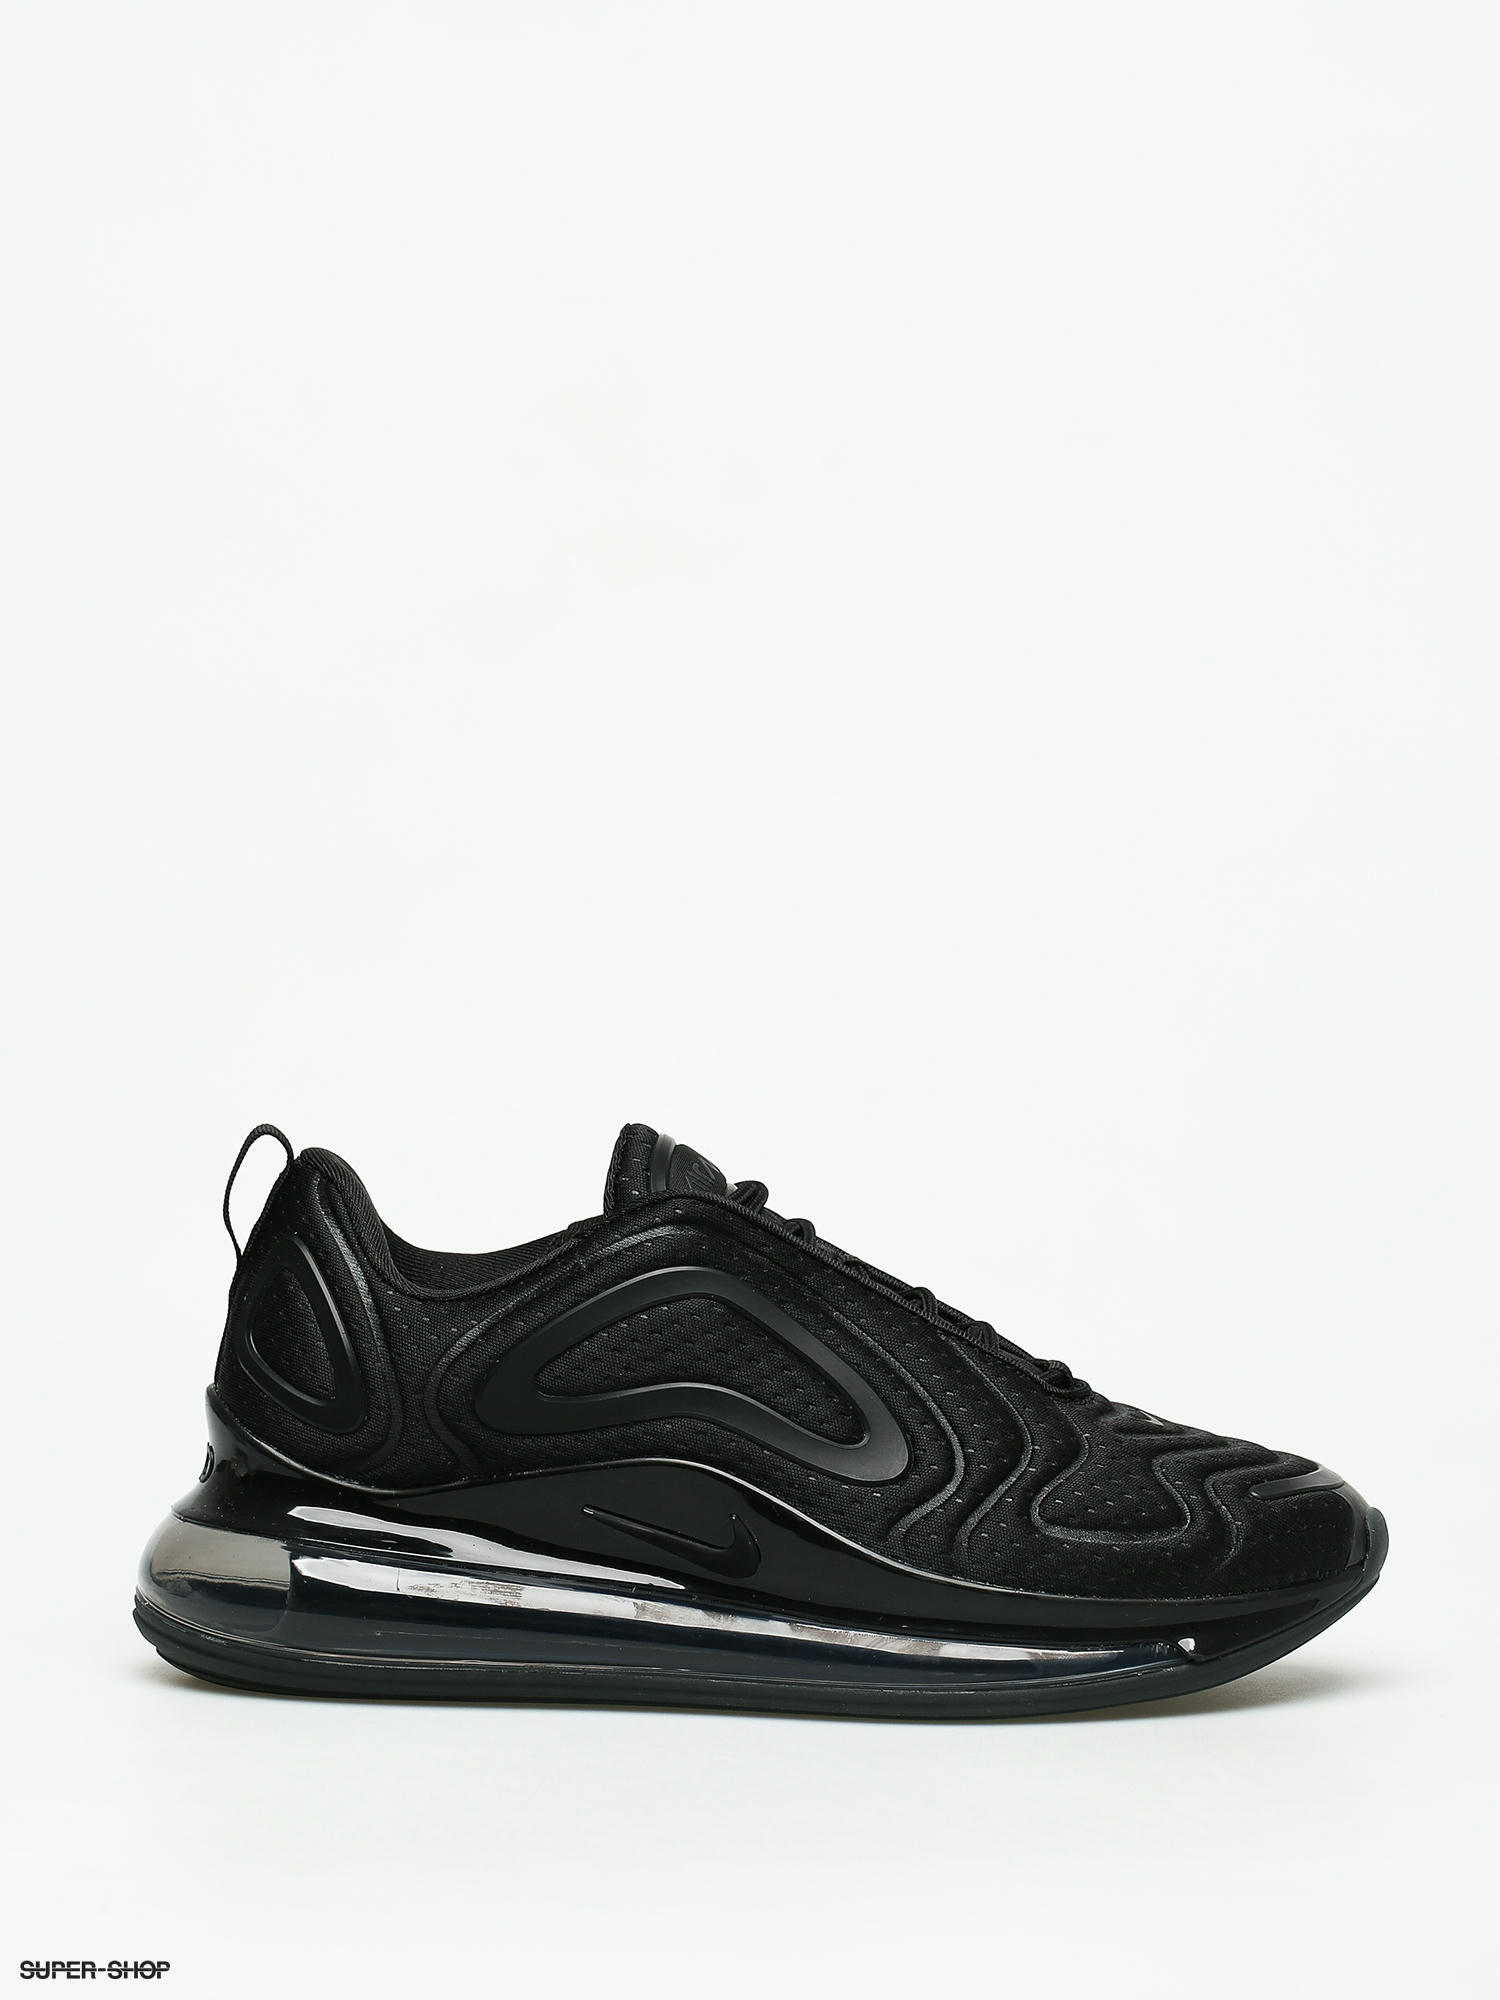 Nike Air Max 720 Shoes (black/black anthracite)